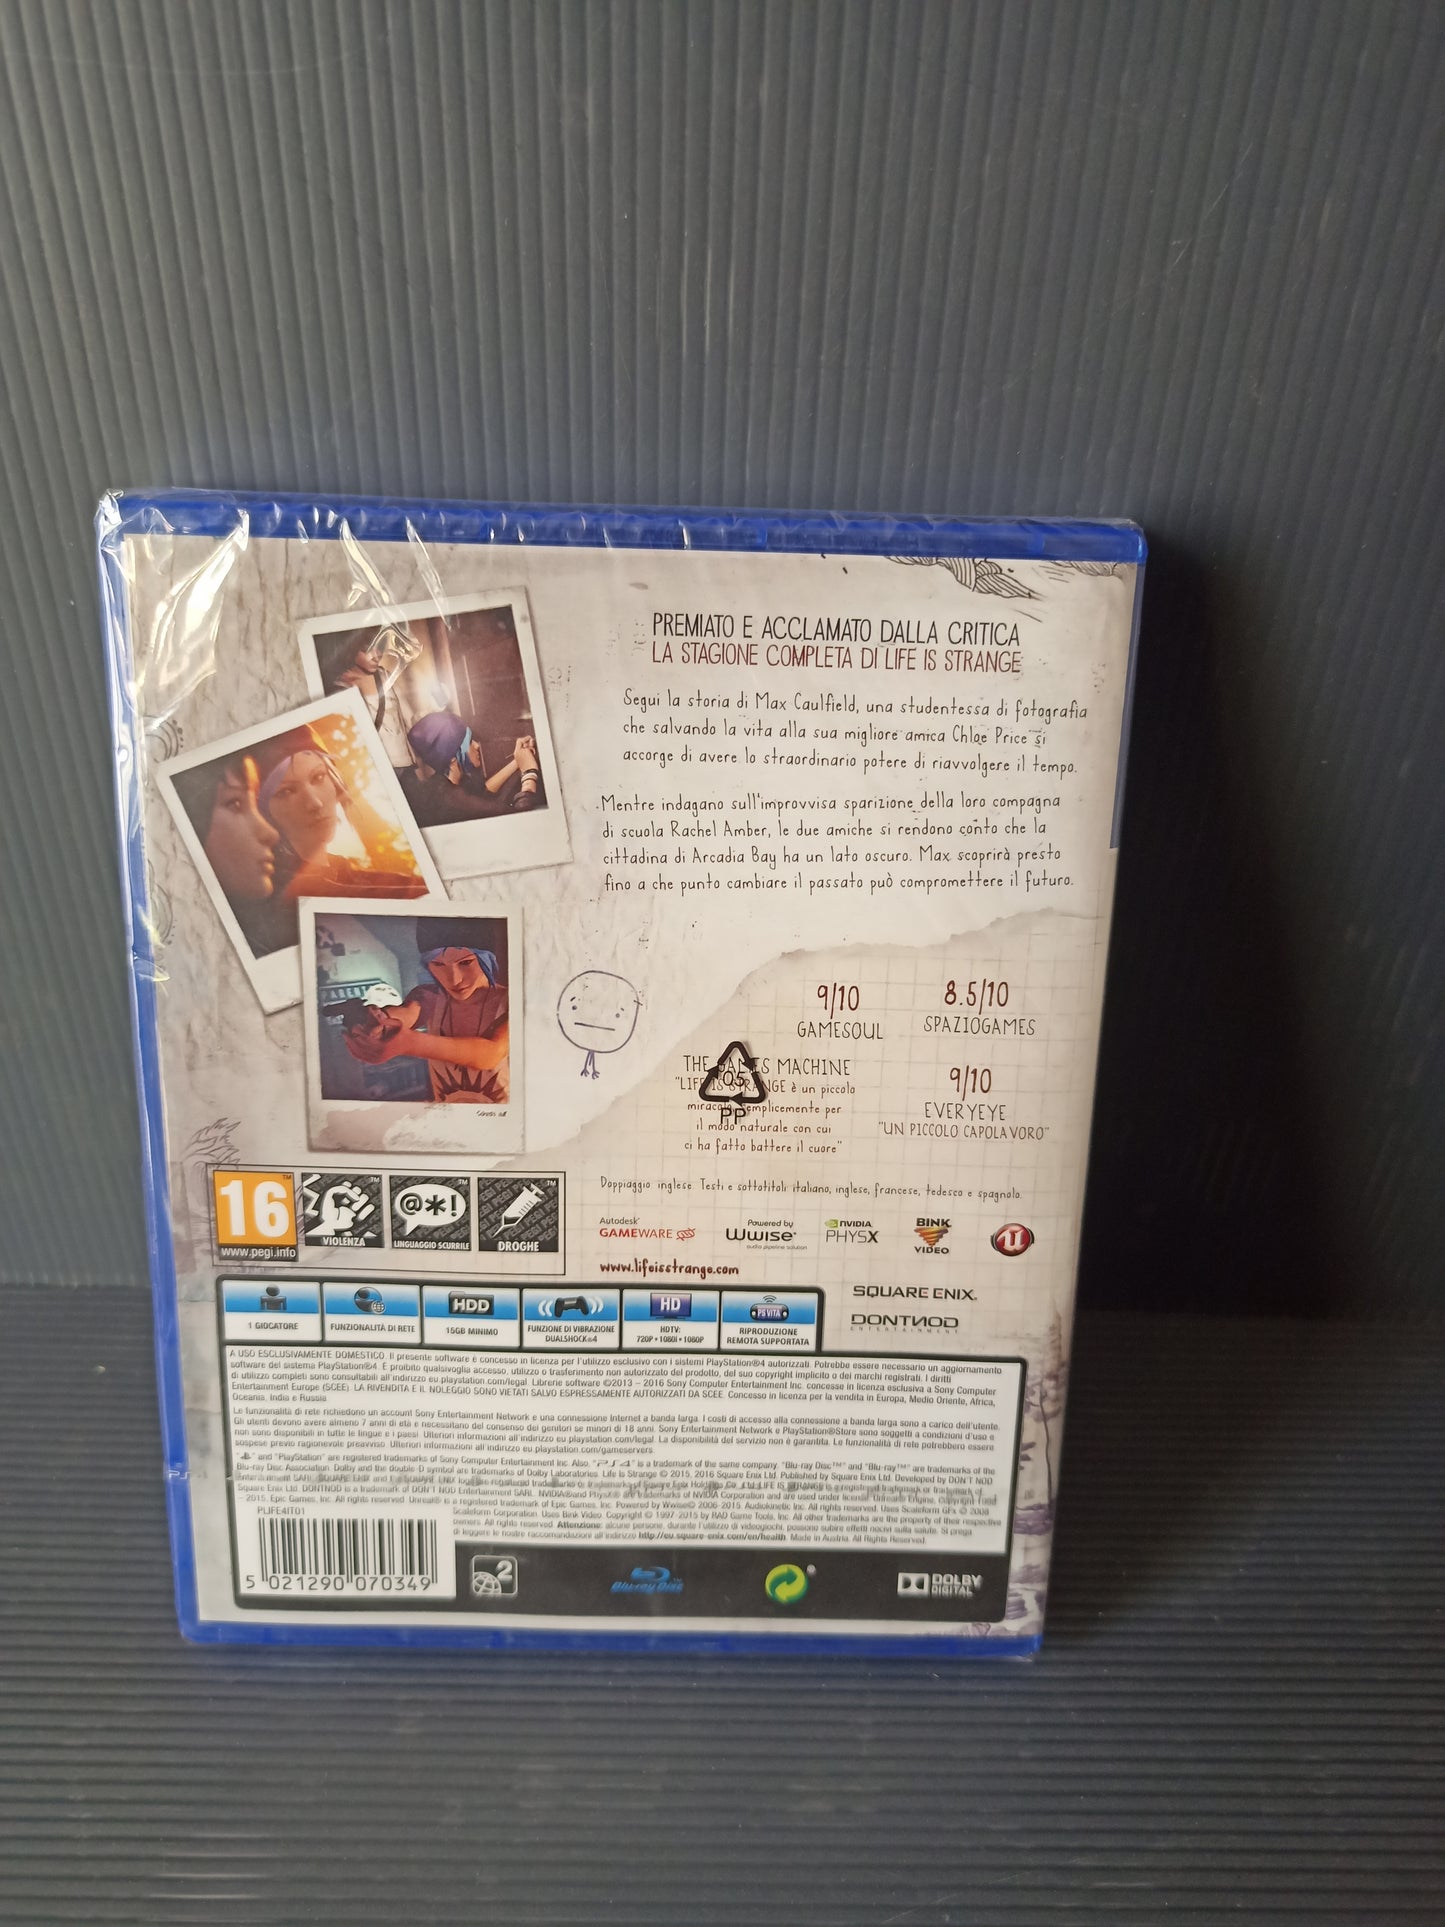 Life Is Strange Ps4 Video Game, Sealed